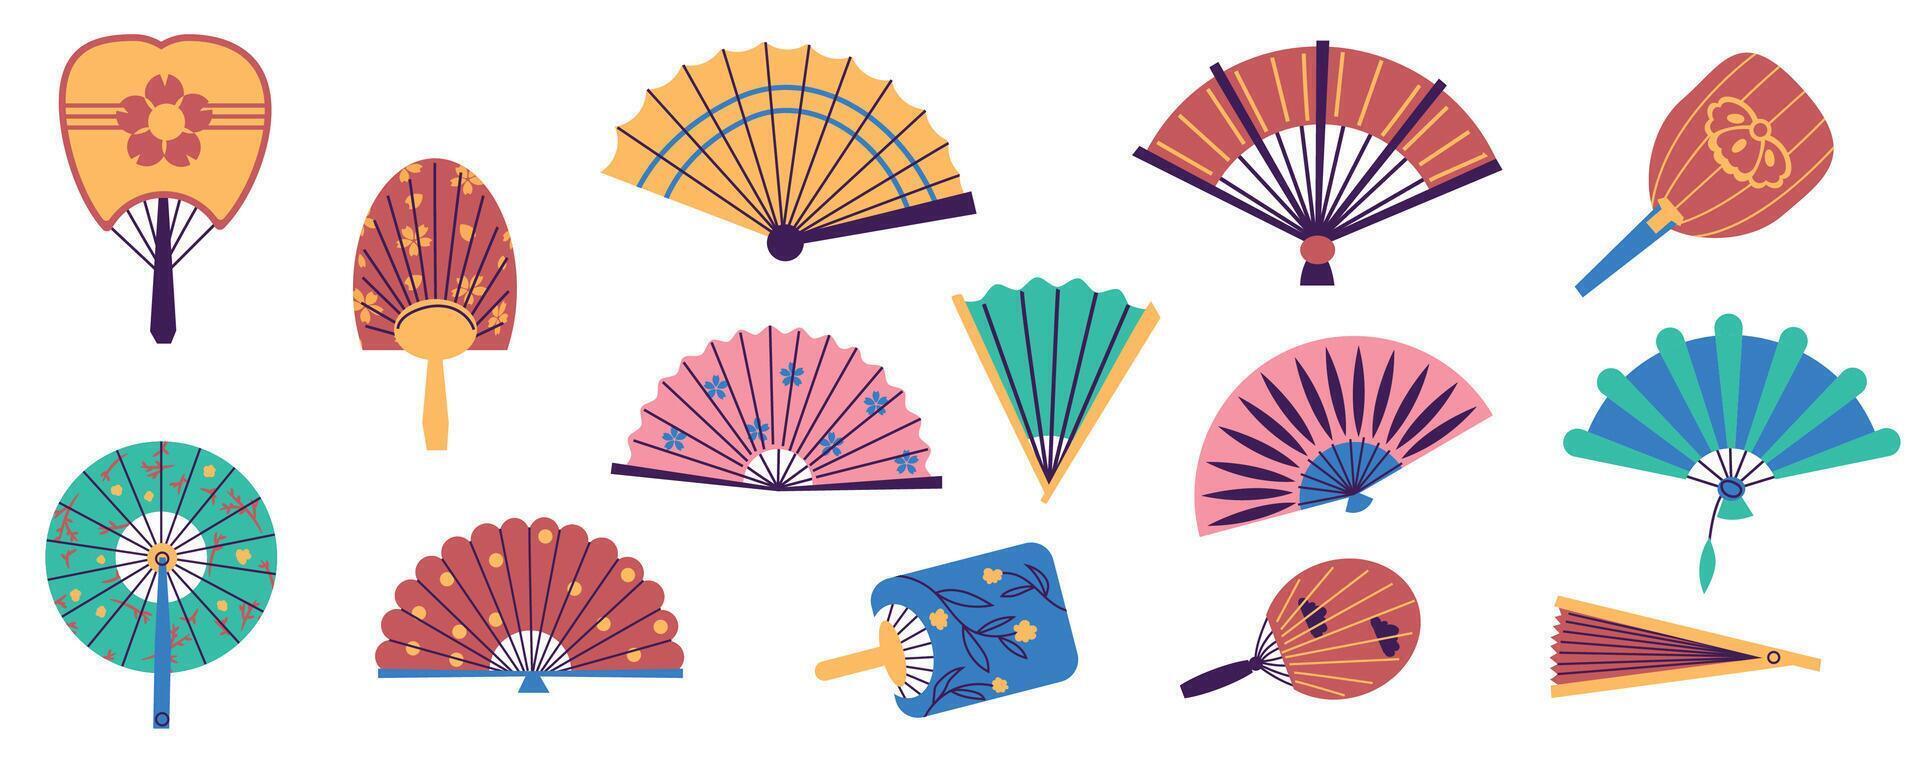 papier hand- fans. traditioneel oosters vouwen fans, hand- wind accessoires vlak stijl verschillend kleur. vector Chinese Japans Aziatisch fans reeks